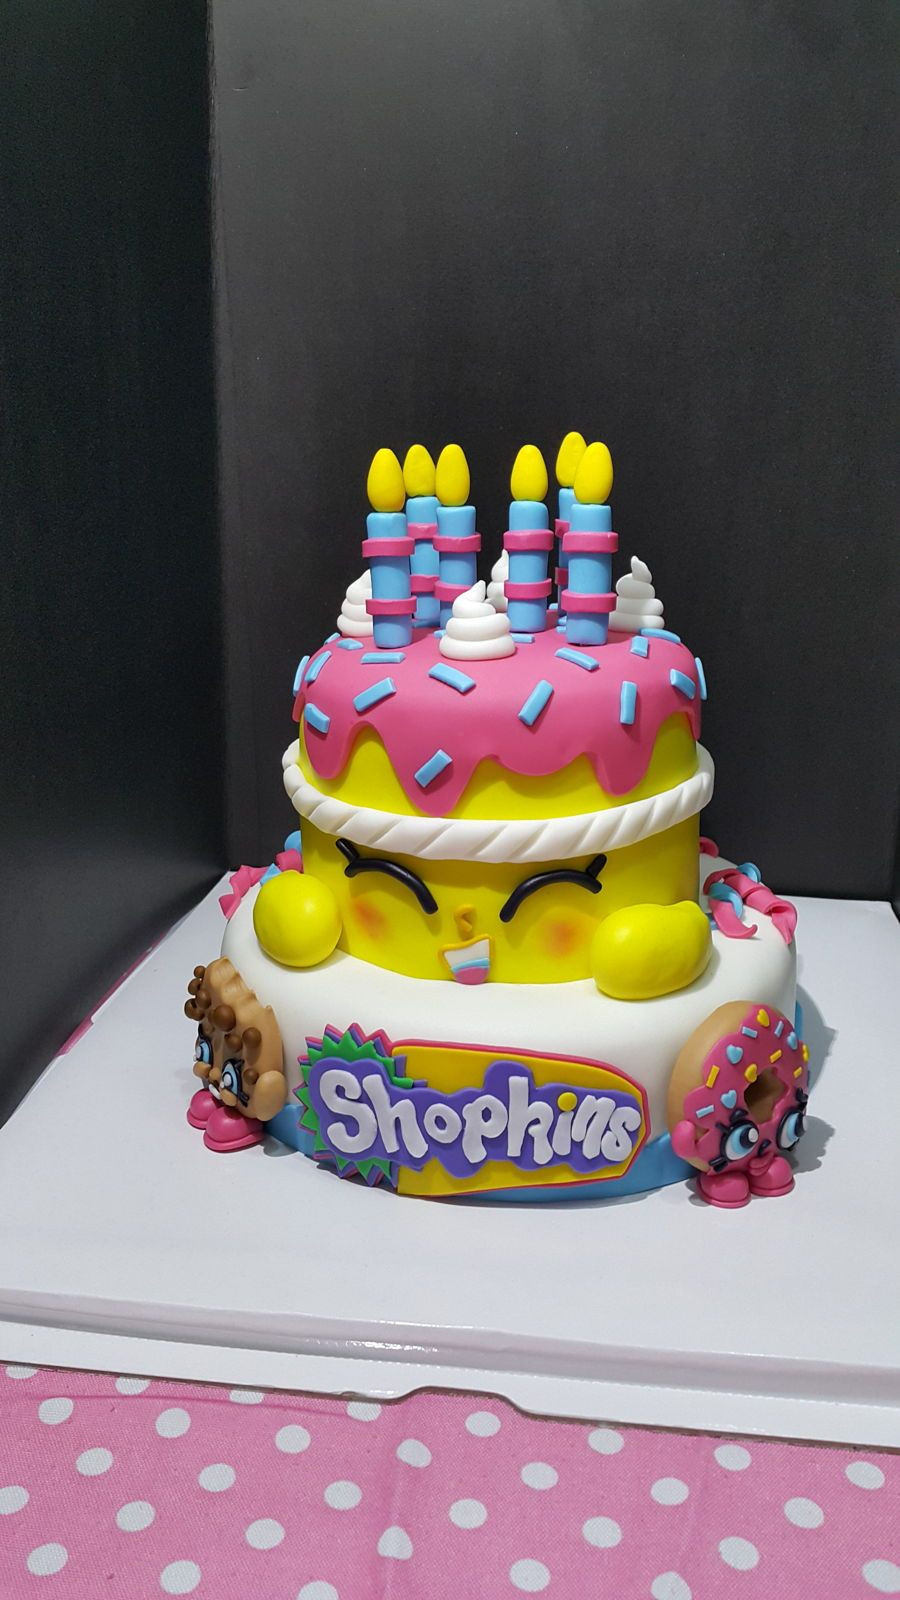 Best ideas about Shopkins Birthday Cake Ideas
. Save or Pin Shopkins Cake Shopkins Party Ideas Now.